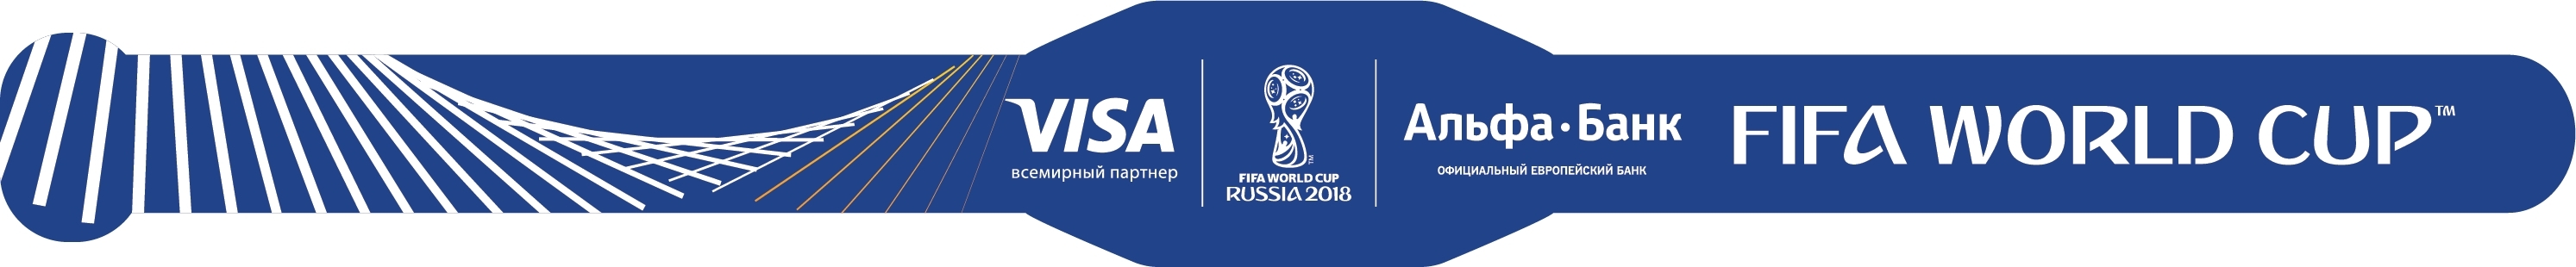 Debit Card FIFA World Cup in Russia 2018 VISA Russian bank Russkiy Standart 